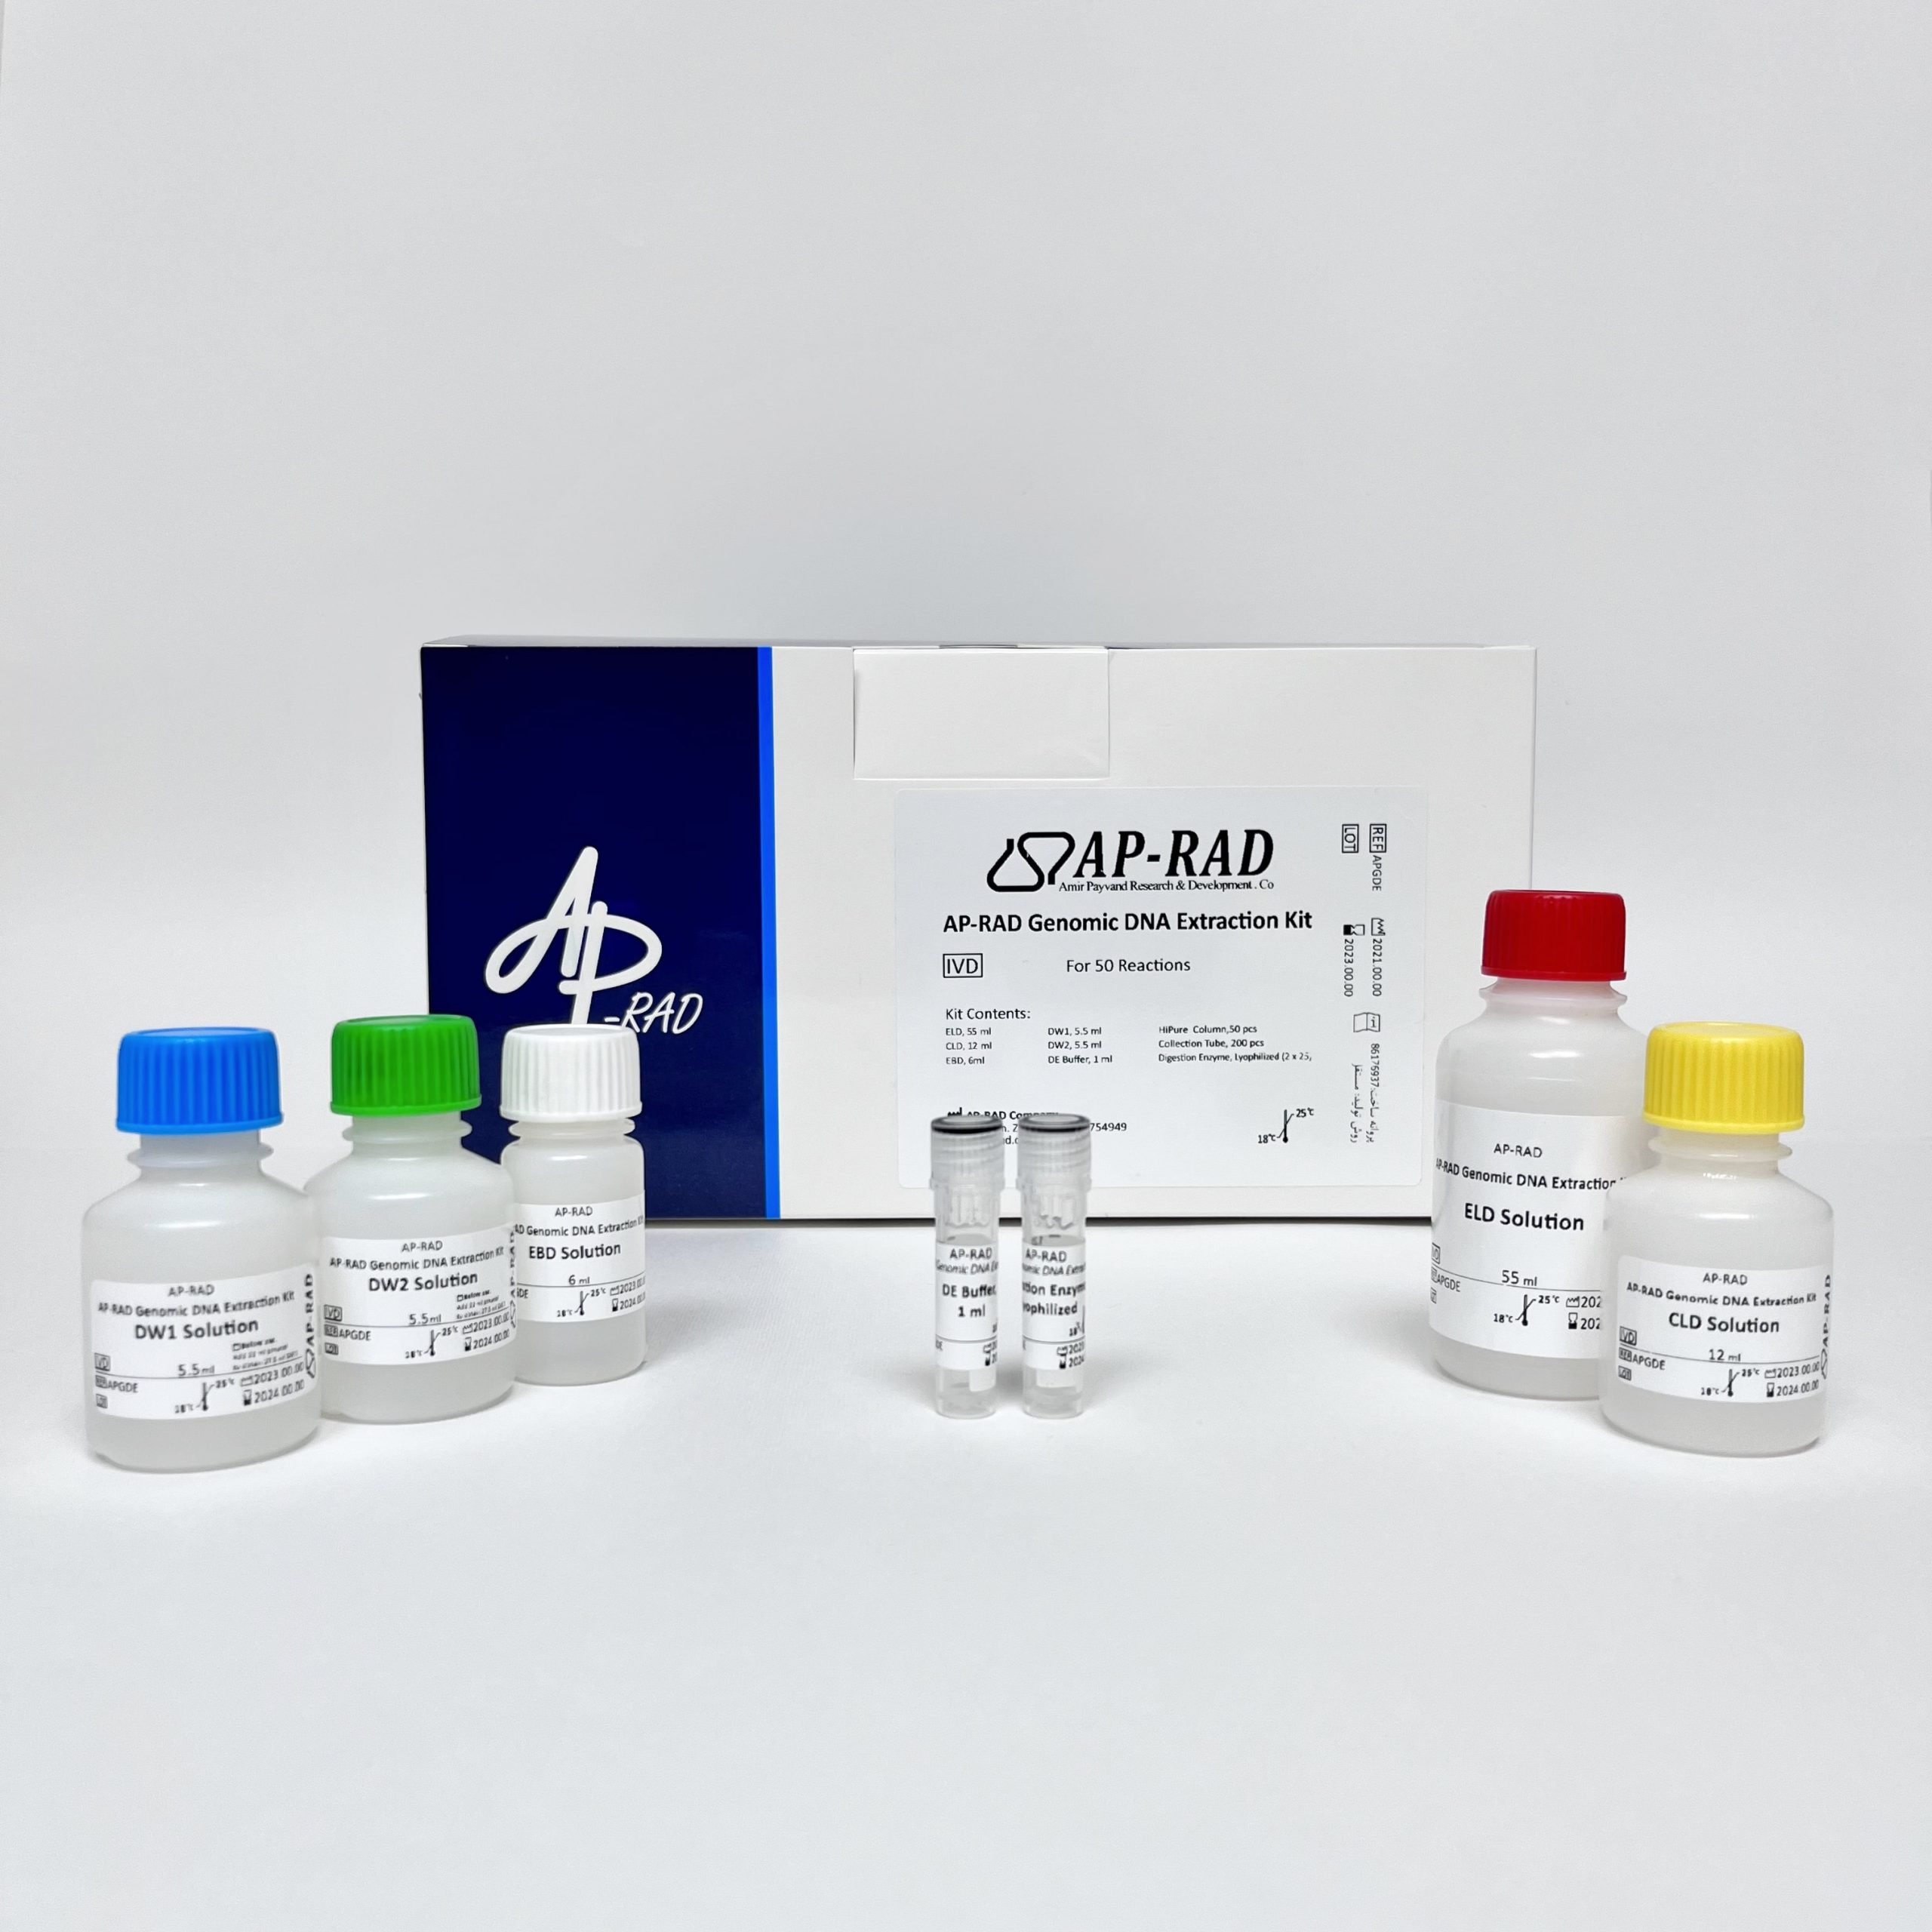 AP-RAD Genomic DNA Extraction Kit